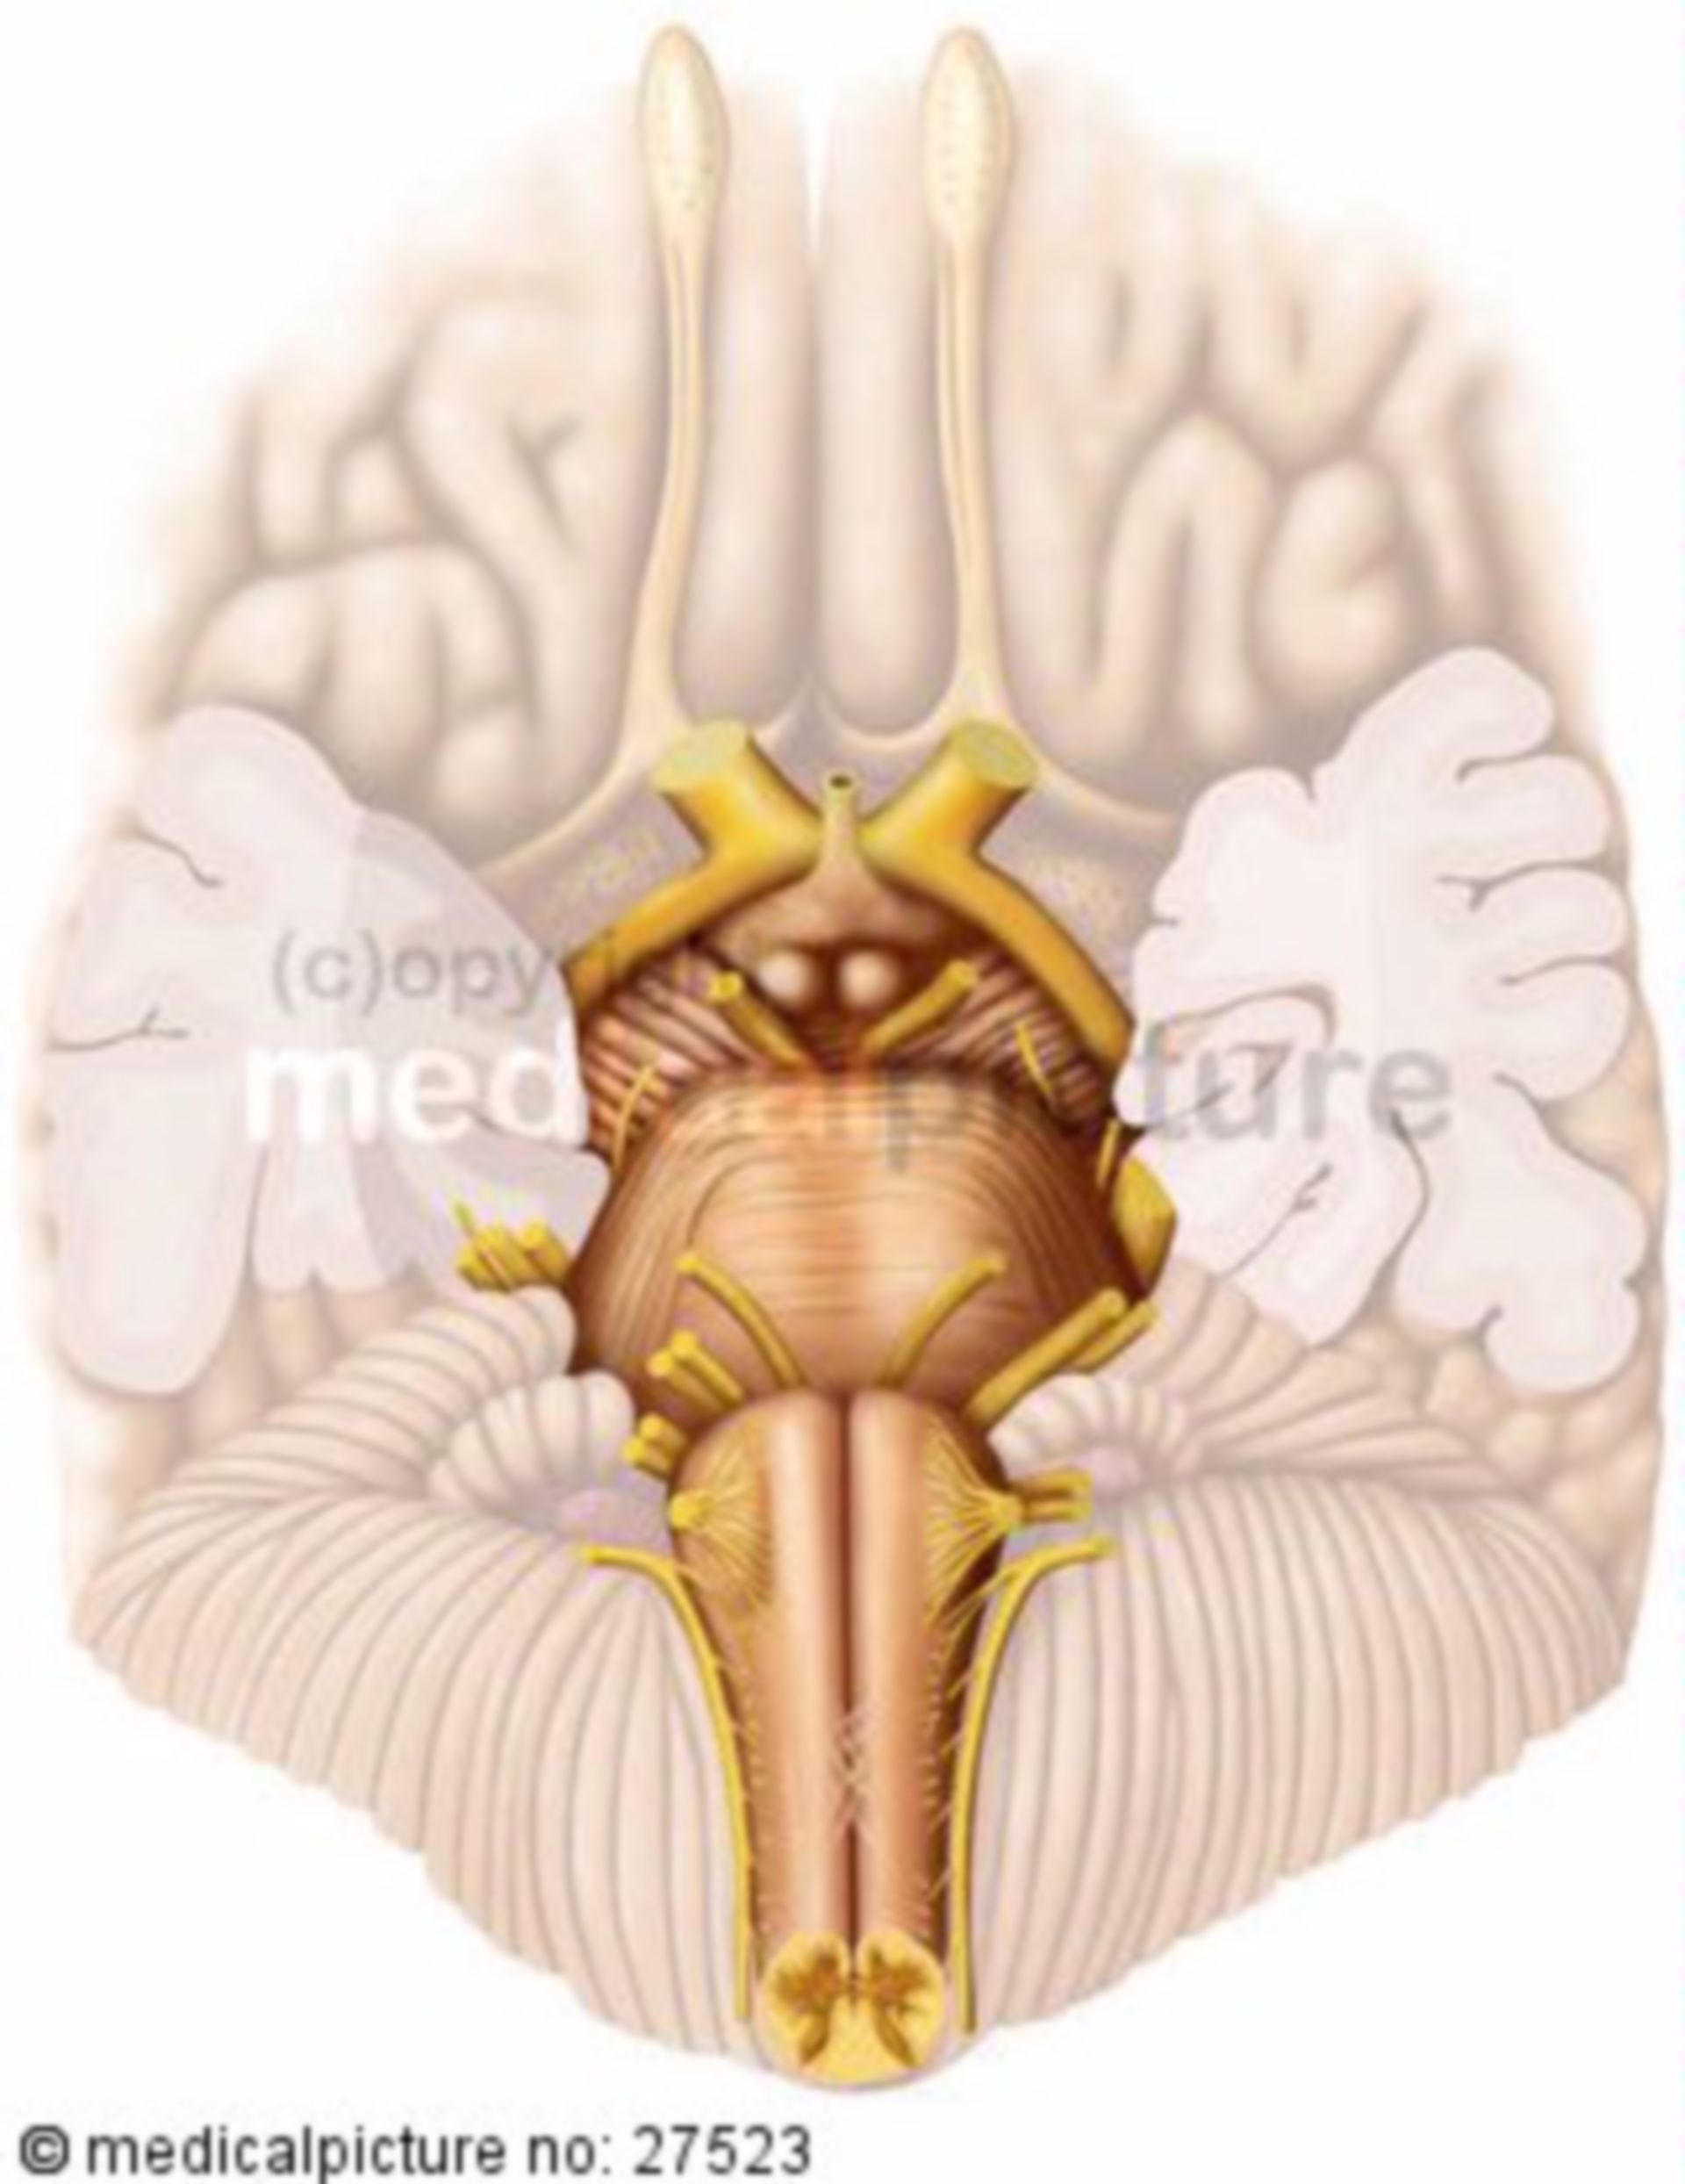 Cerebral base with cranial nerves